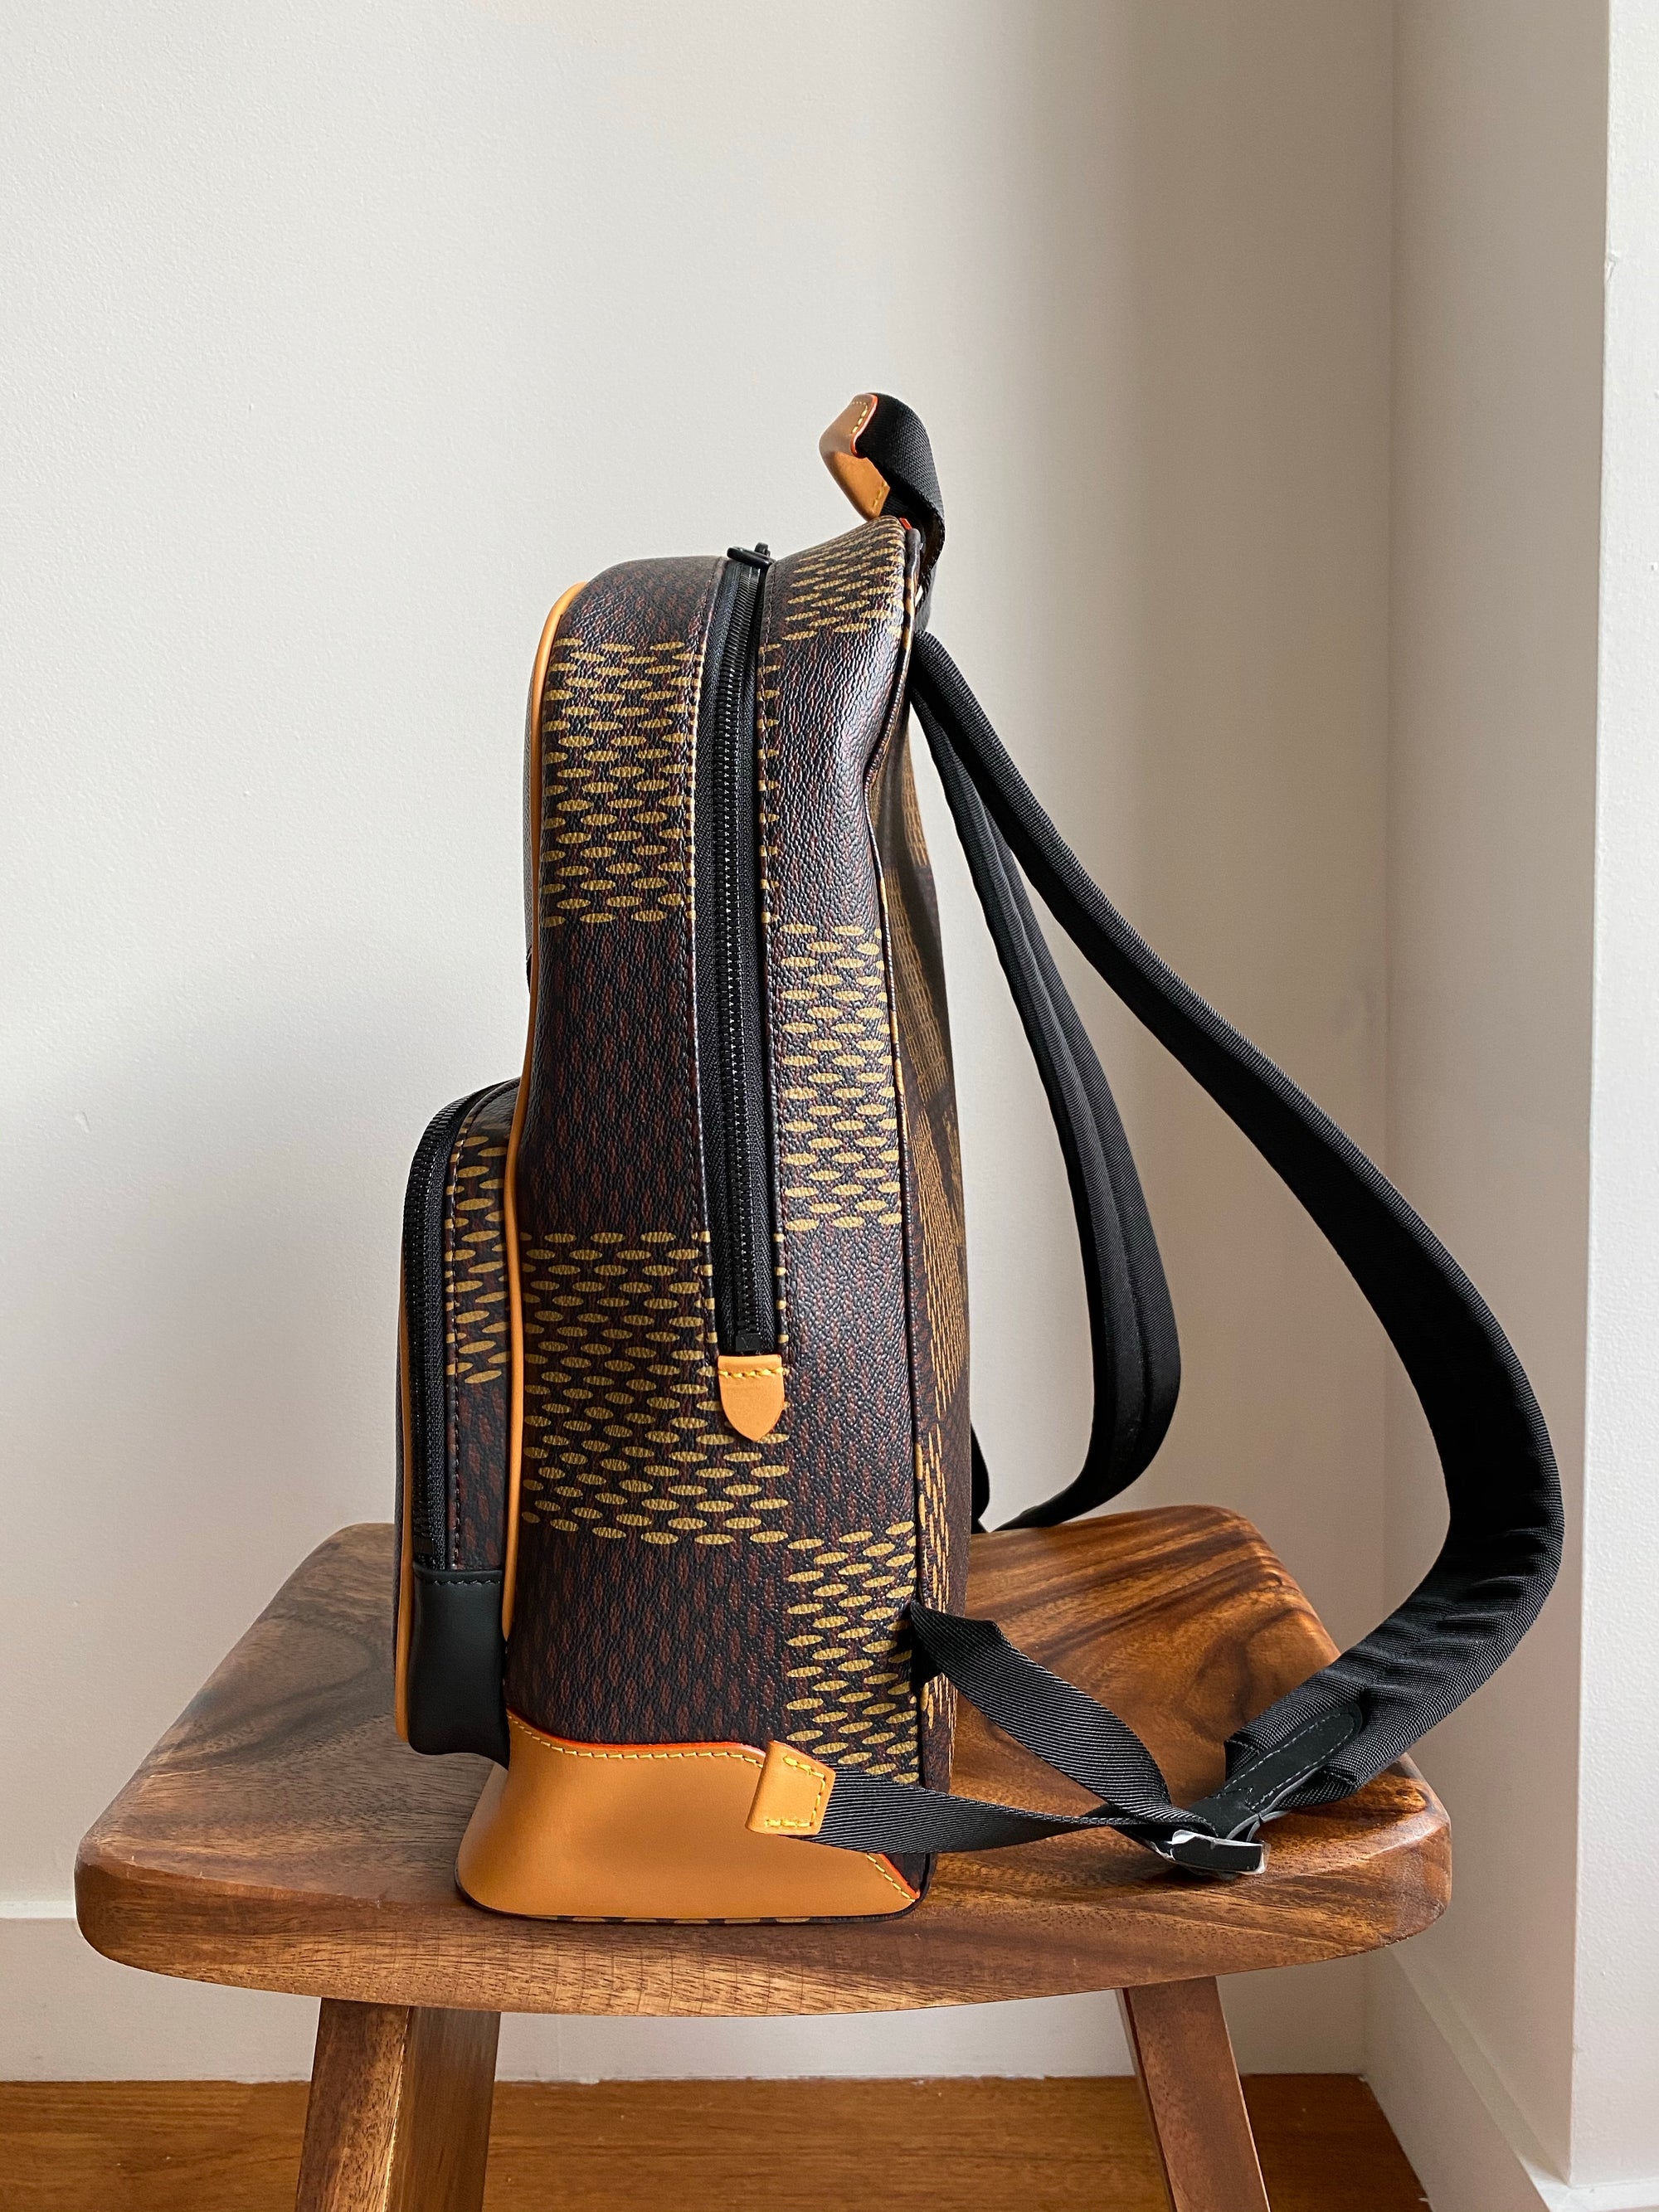 Louis Vuitton X NIGO Campus Monogram Damier Ebene Canvas Backpack